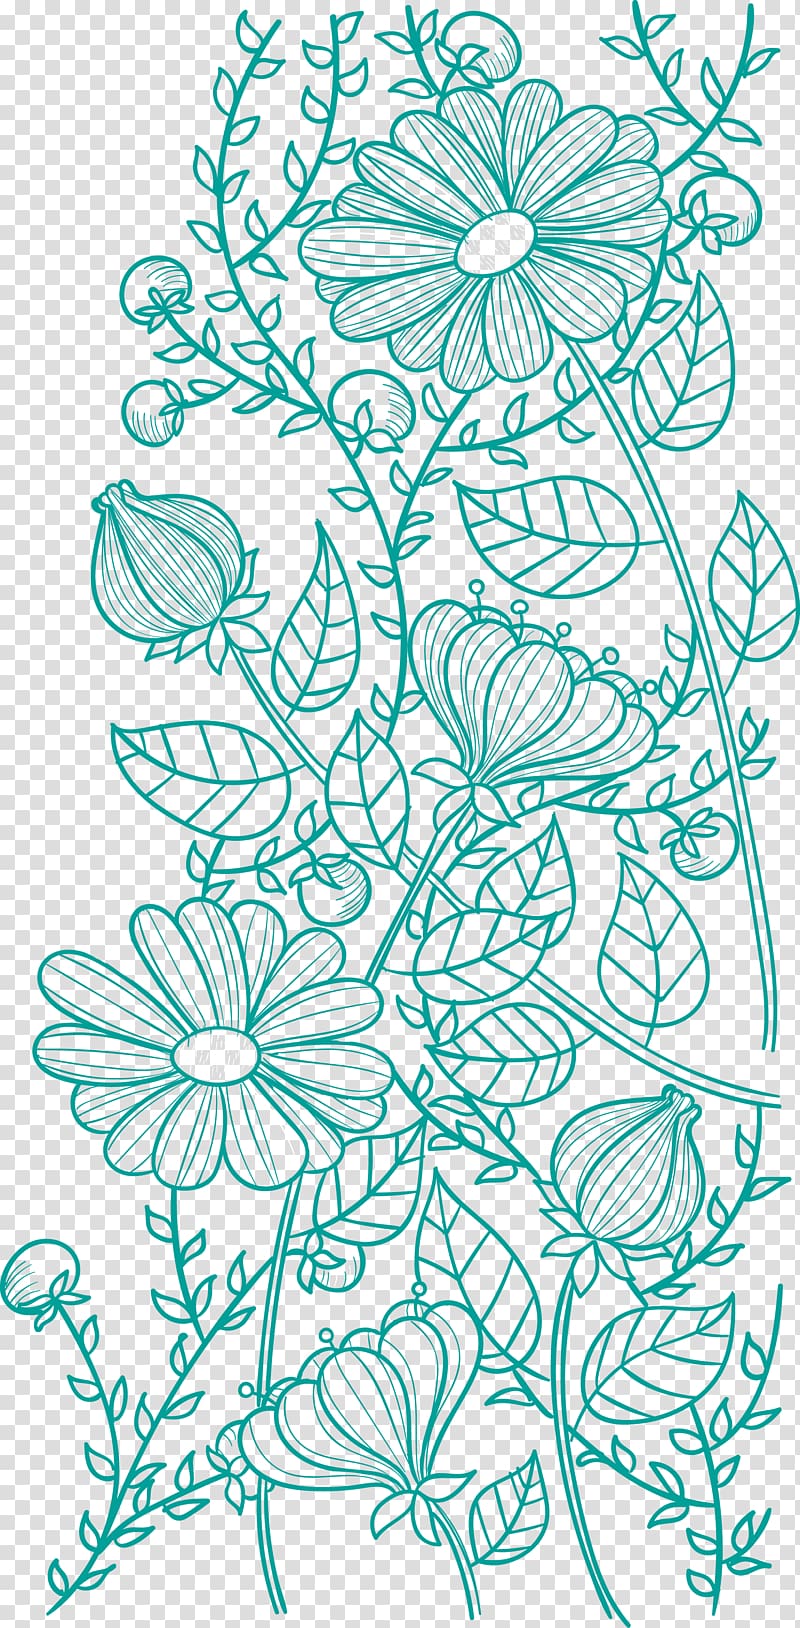 Teal flower sketch illustration, Flower Pattern, Flower pattern